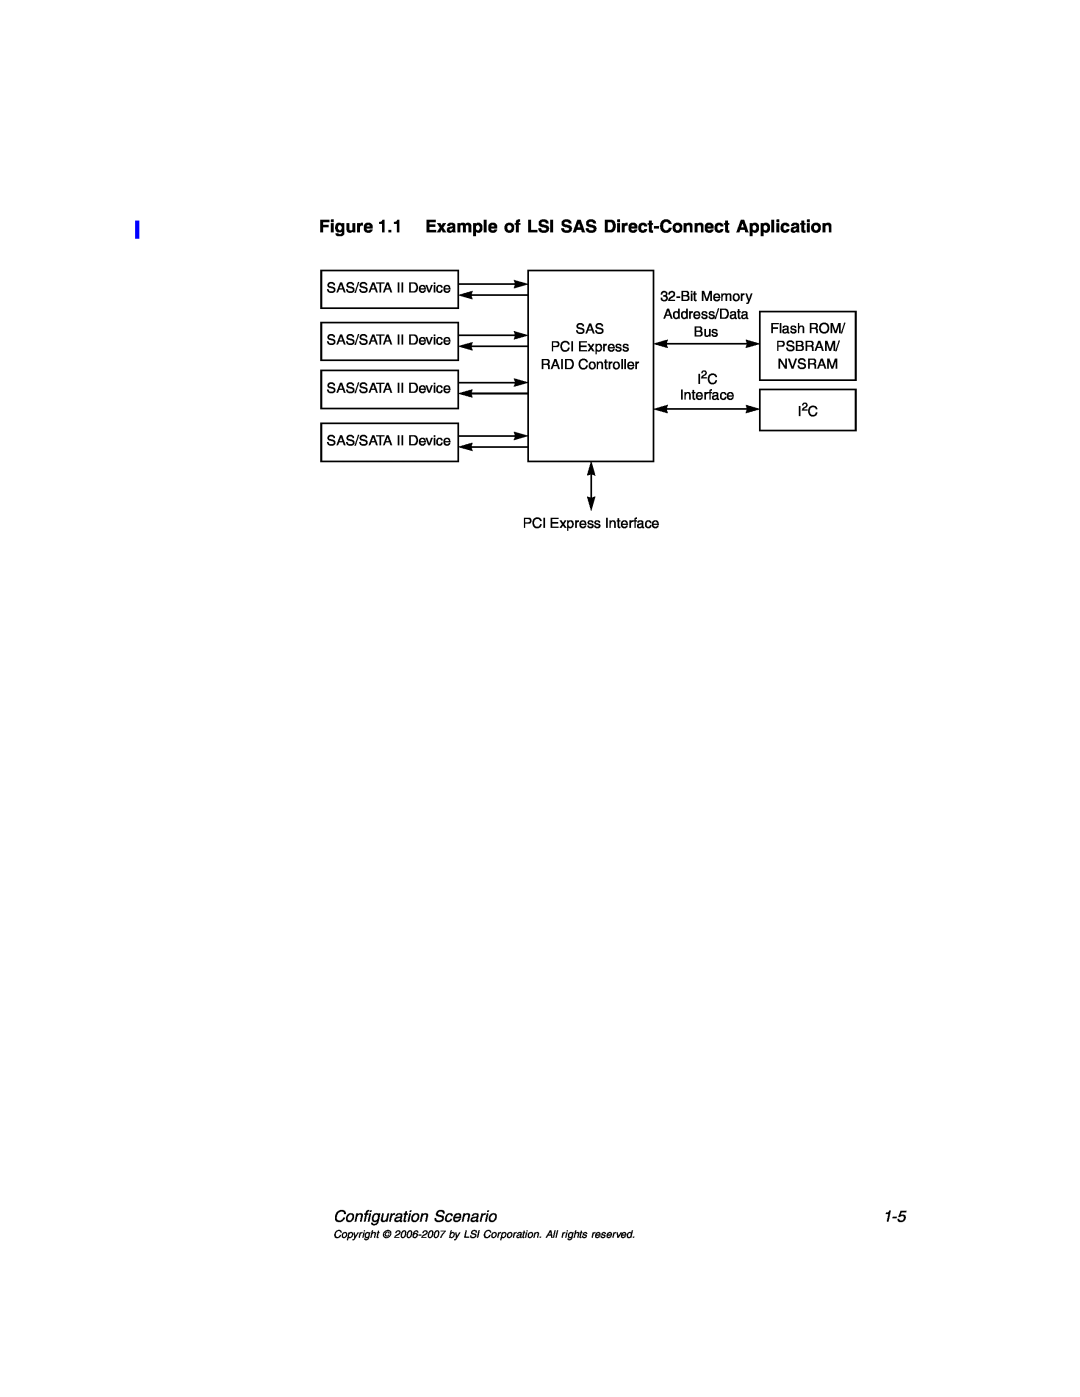 IBM MegaRAID 8480 manual 1 Example of LSI SAS Direct-Connect Application, Configuration Scenario, SAS/SATA II Device 